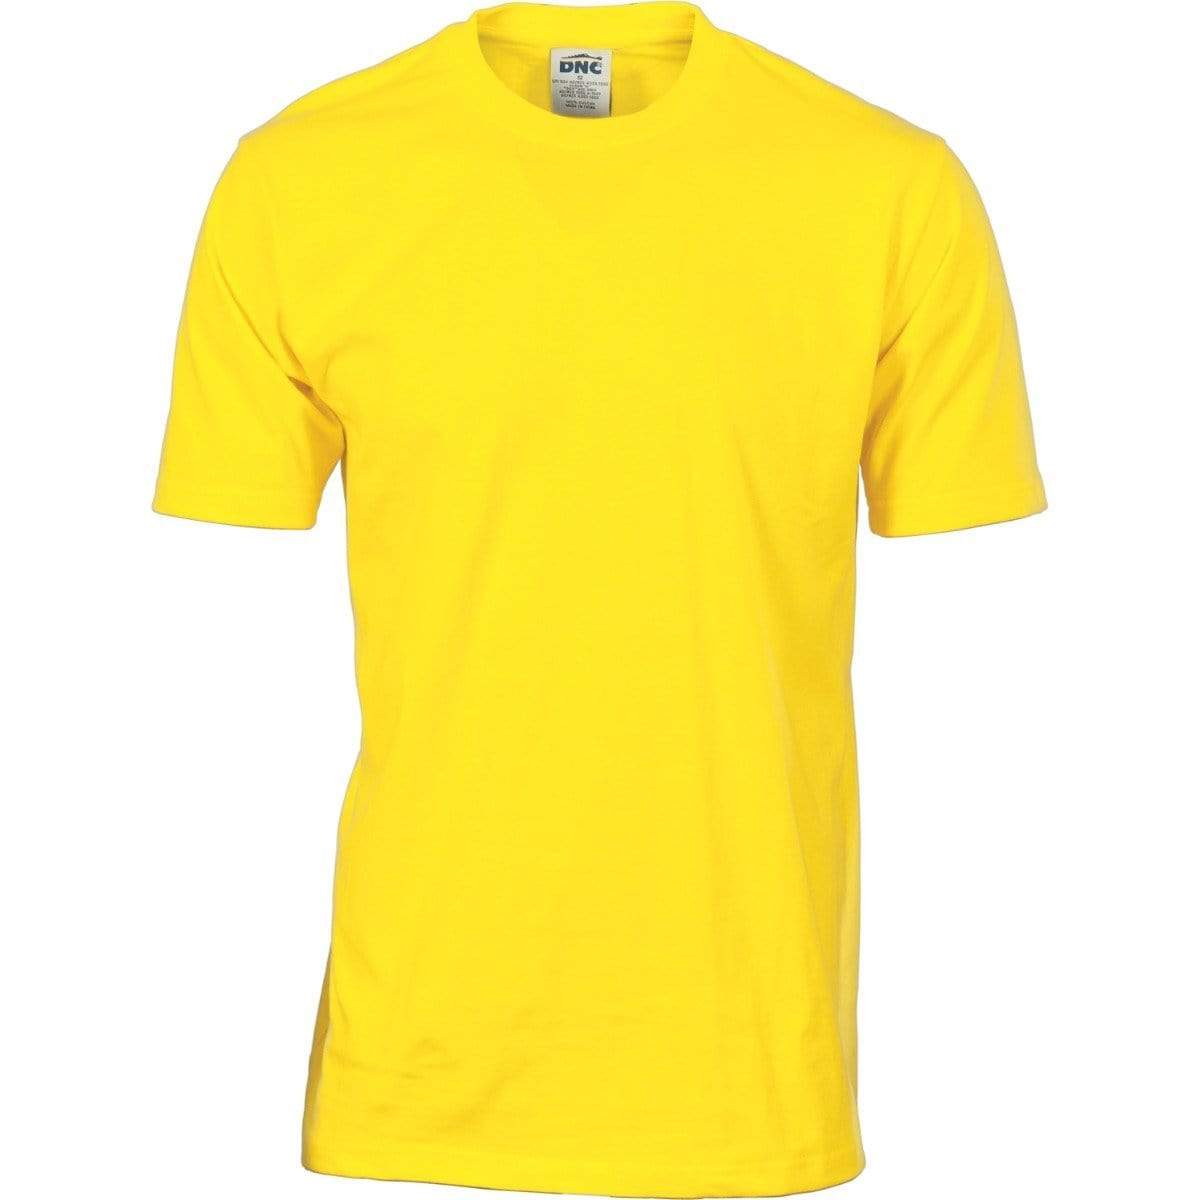 Dnc Workwear Cotton Jersey Short Sleeve Tee - 3847 Work Wear DNC Workwear Yellow XS 